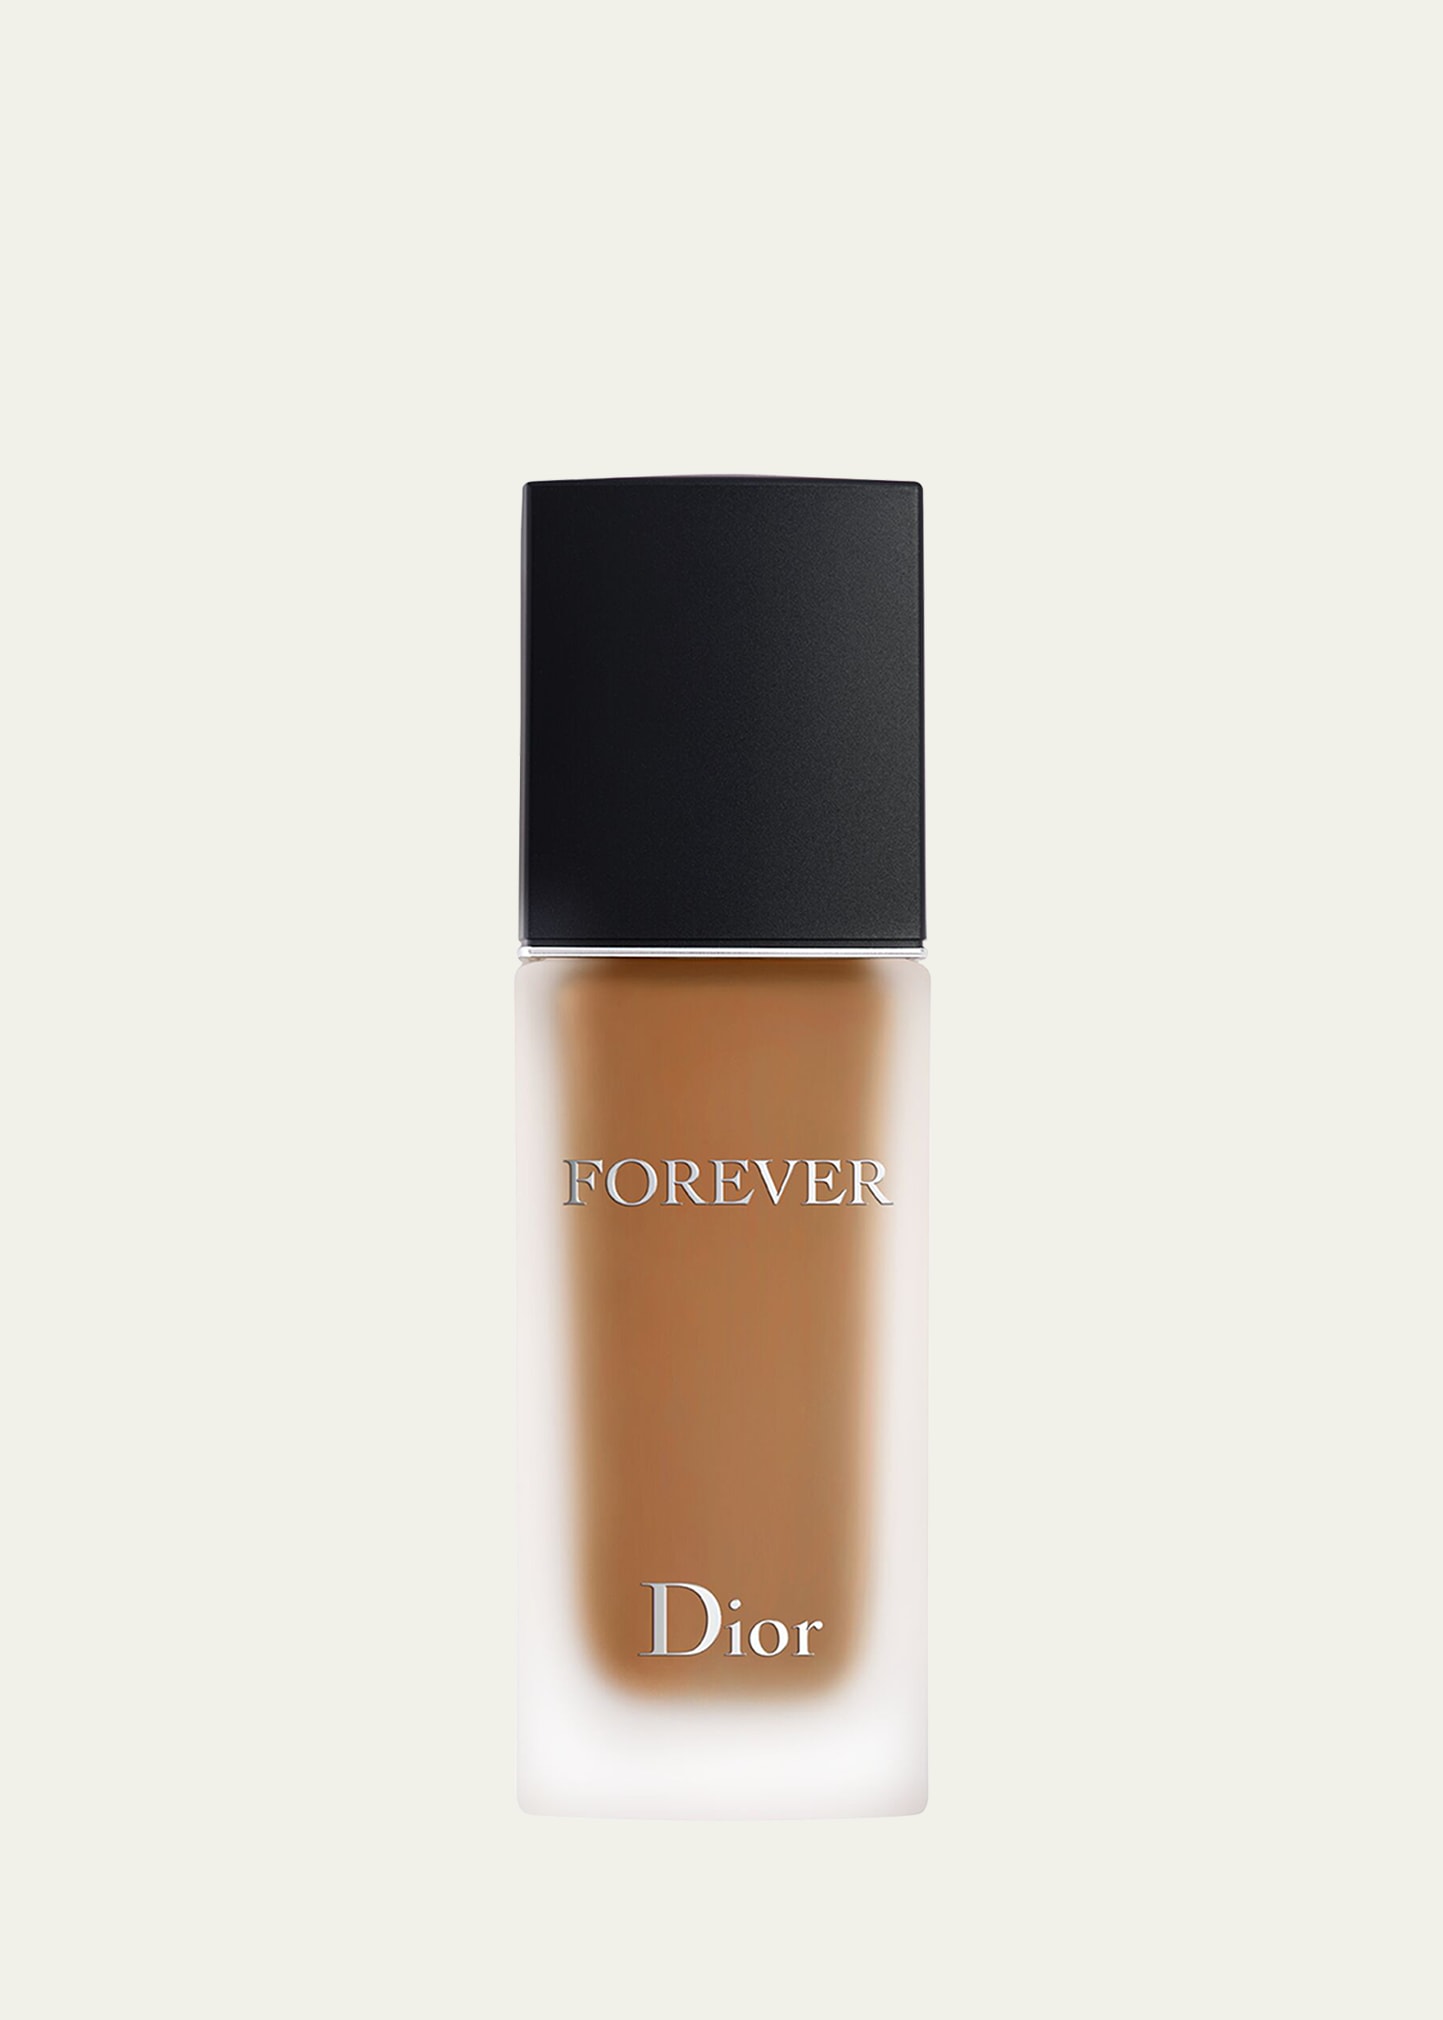 Dior 1 Oz. Forever Matte Skincare Foundation Spf 15 In 6 Warm